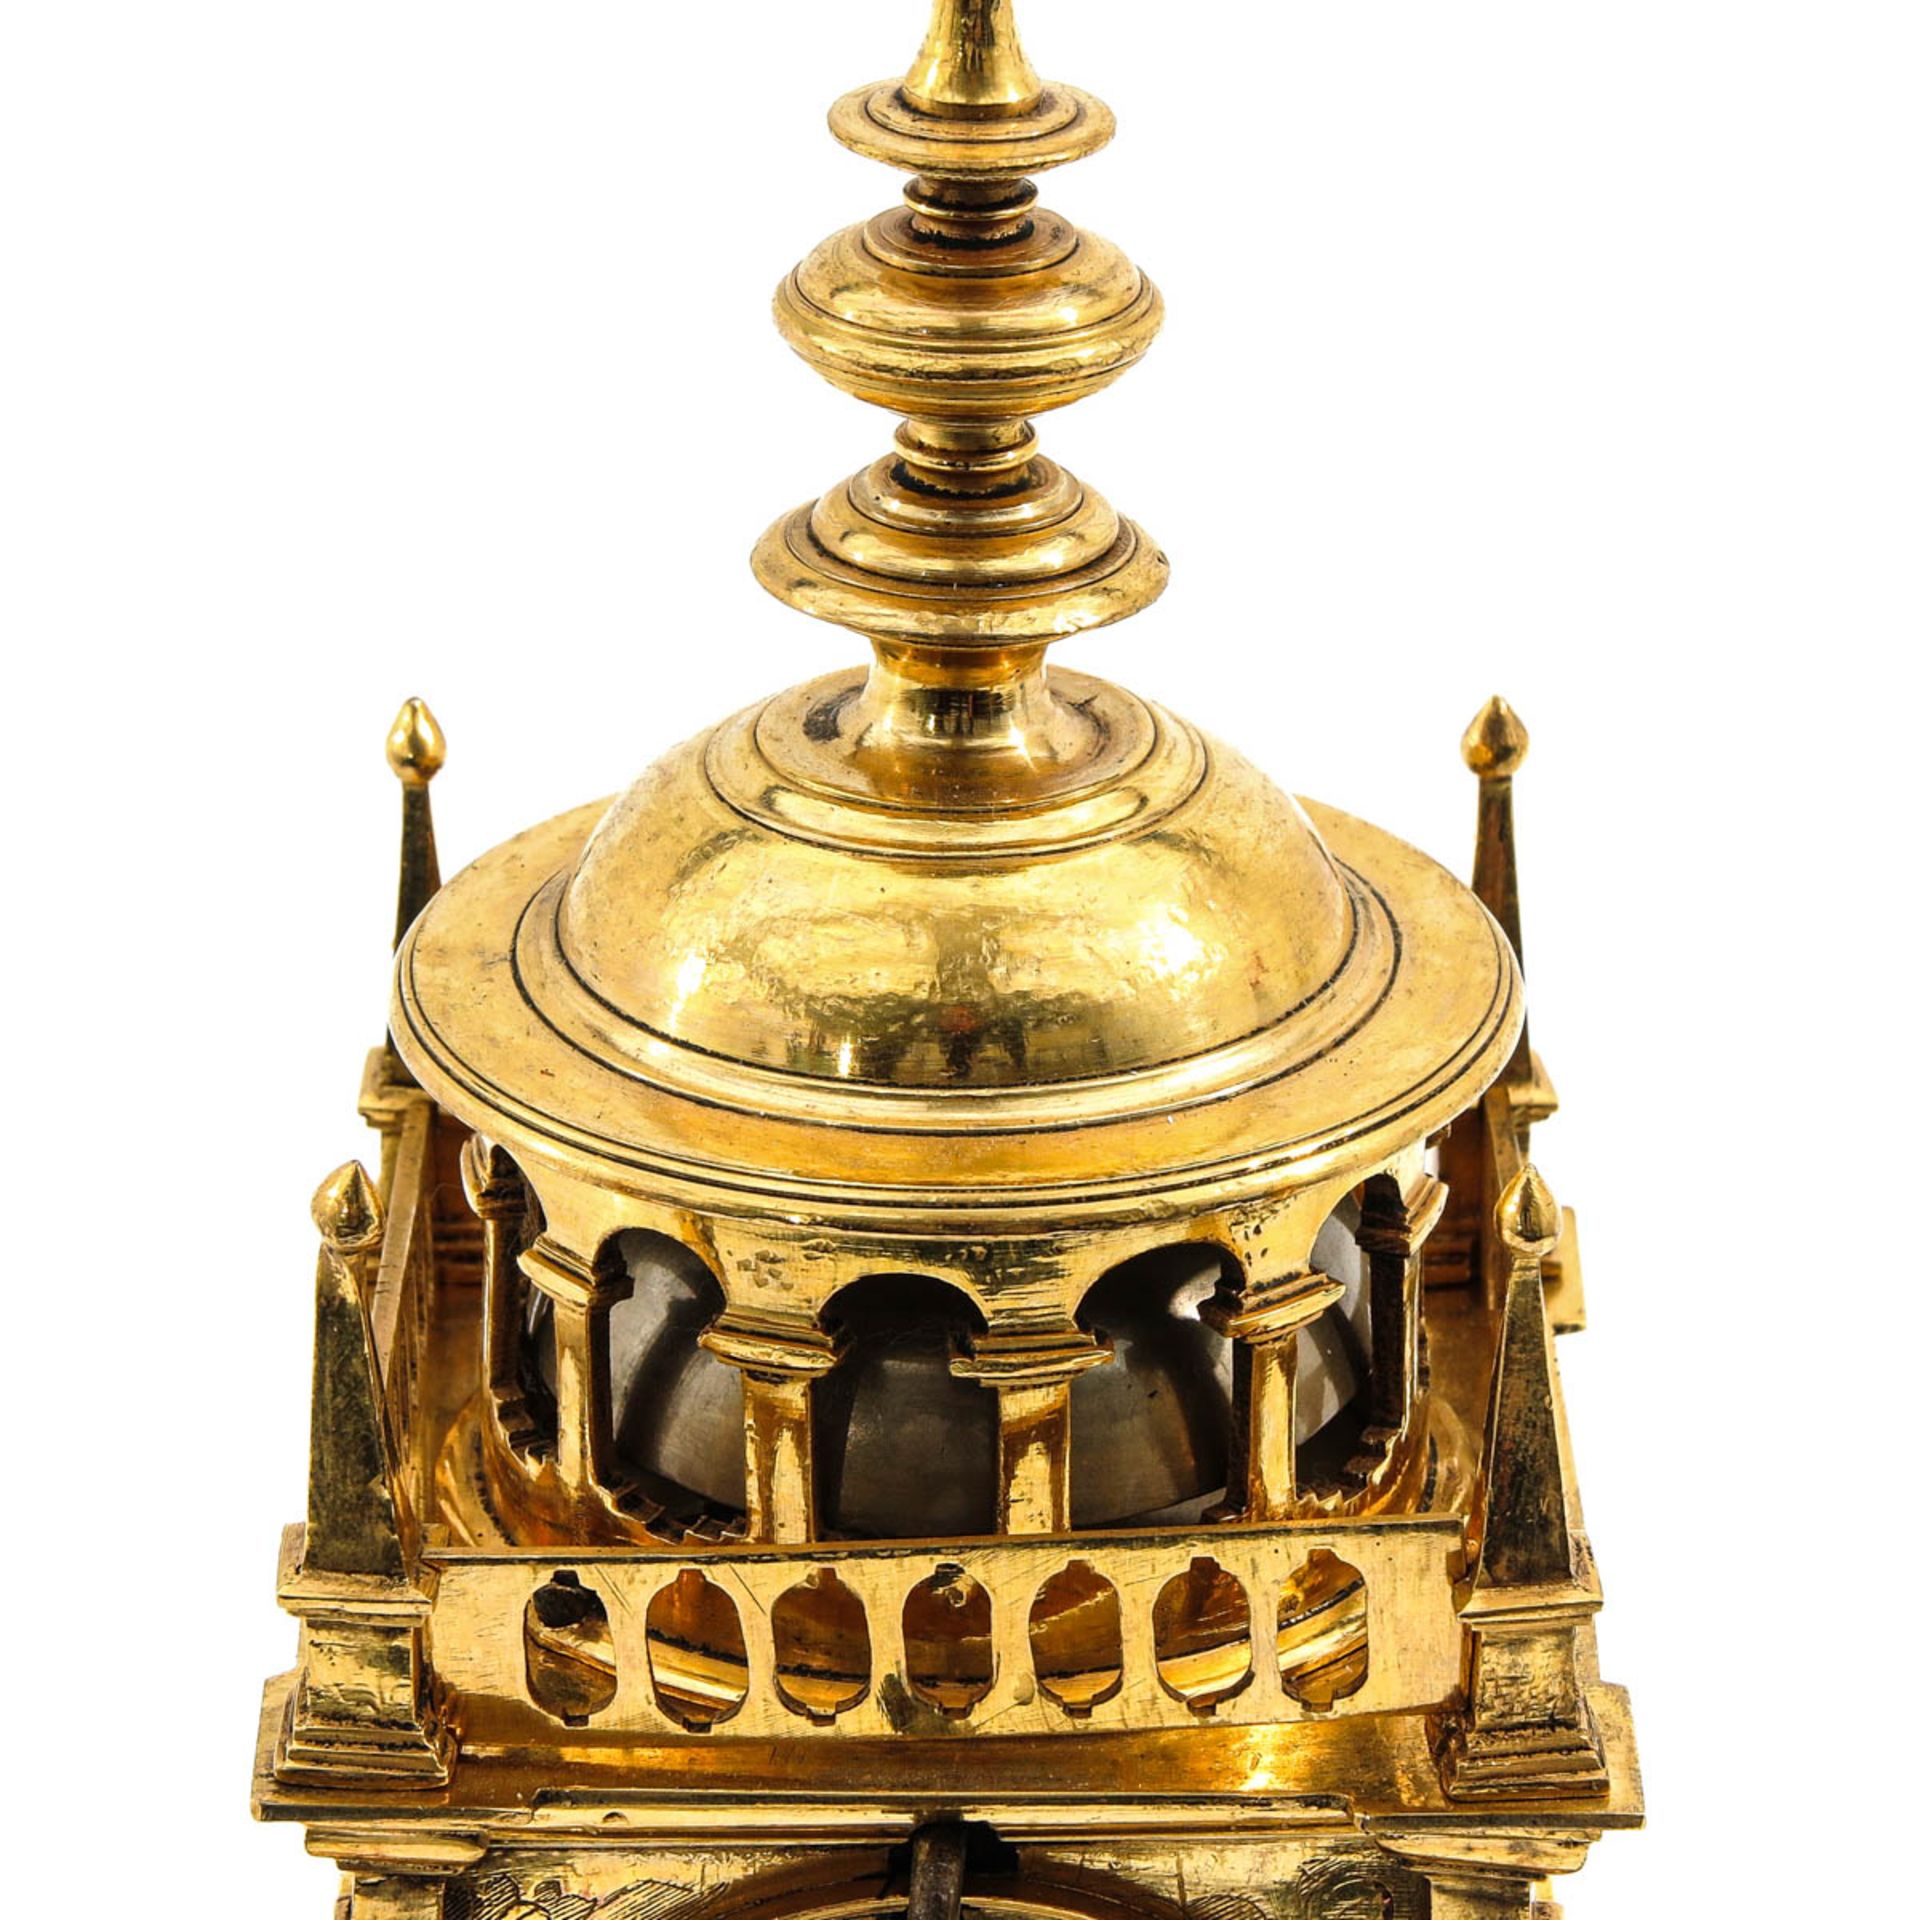 A 17th Century Gilded Turmuhr Clock - Image 10 of 10